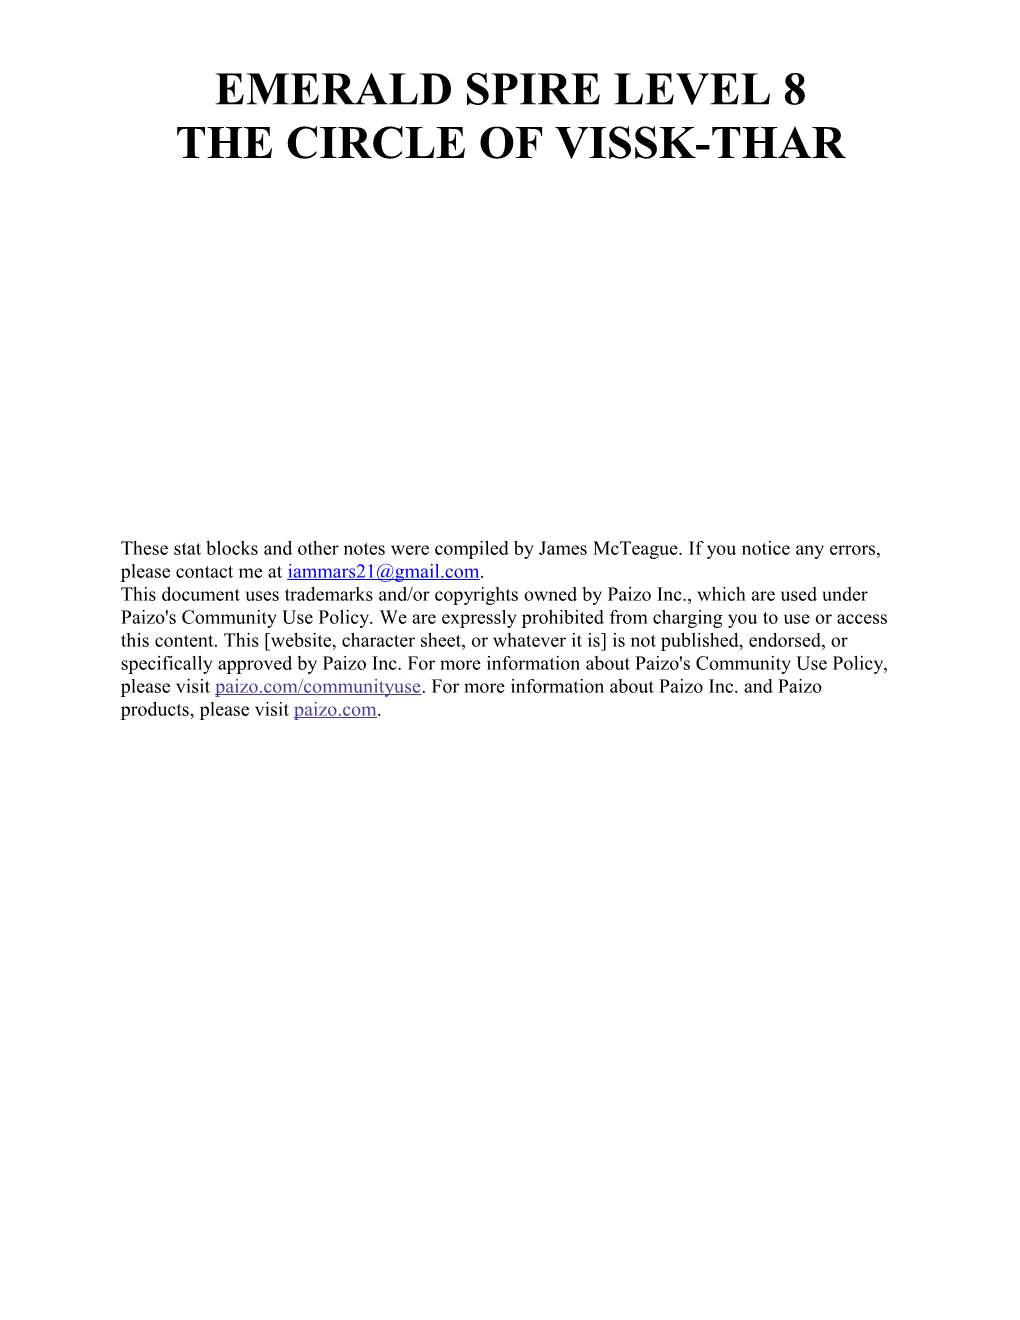 The Circle of Vissk-Thar